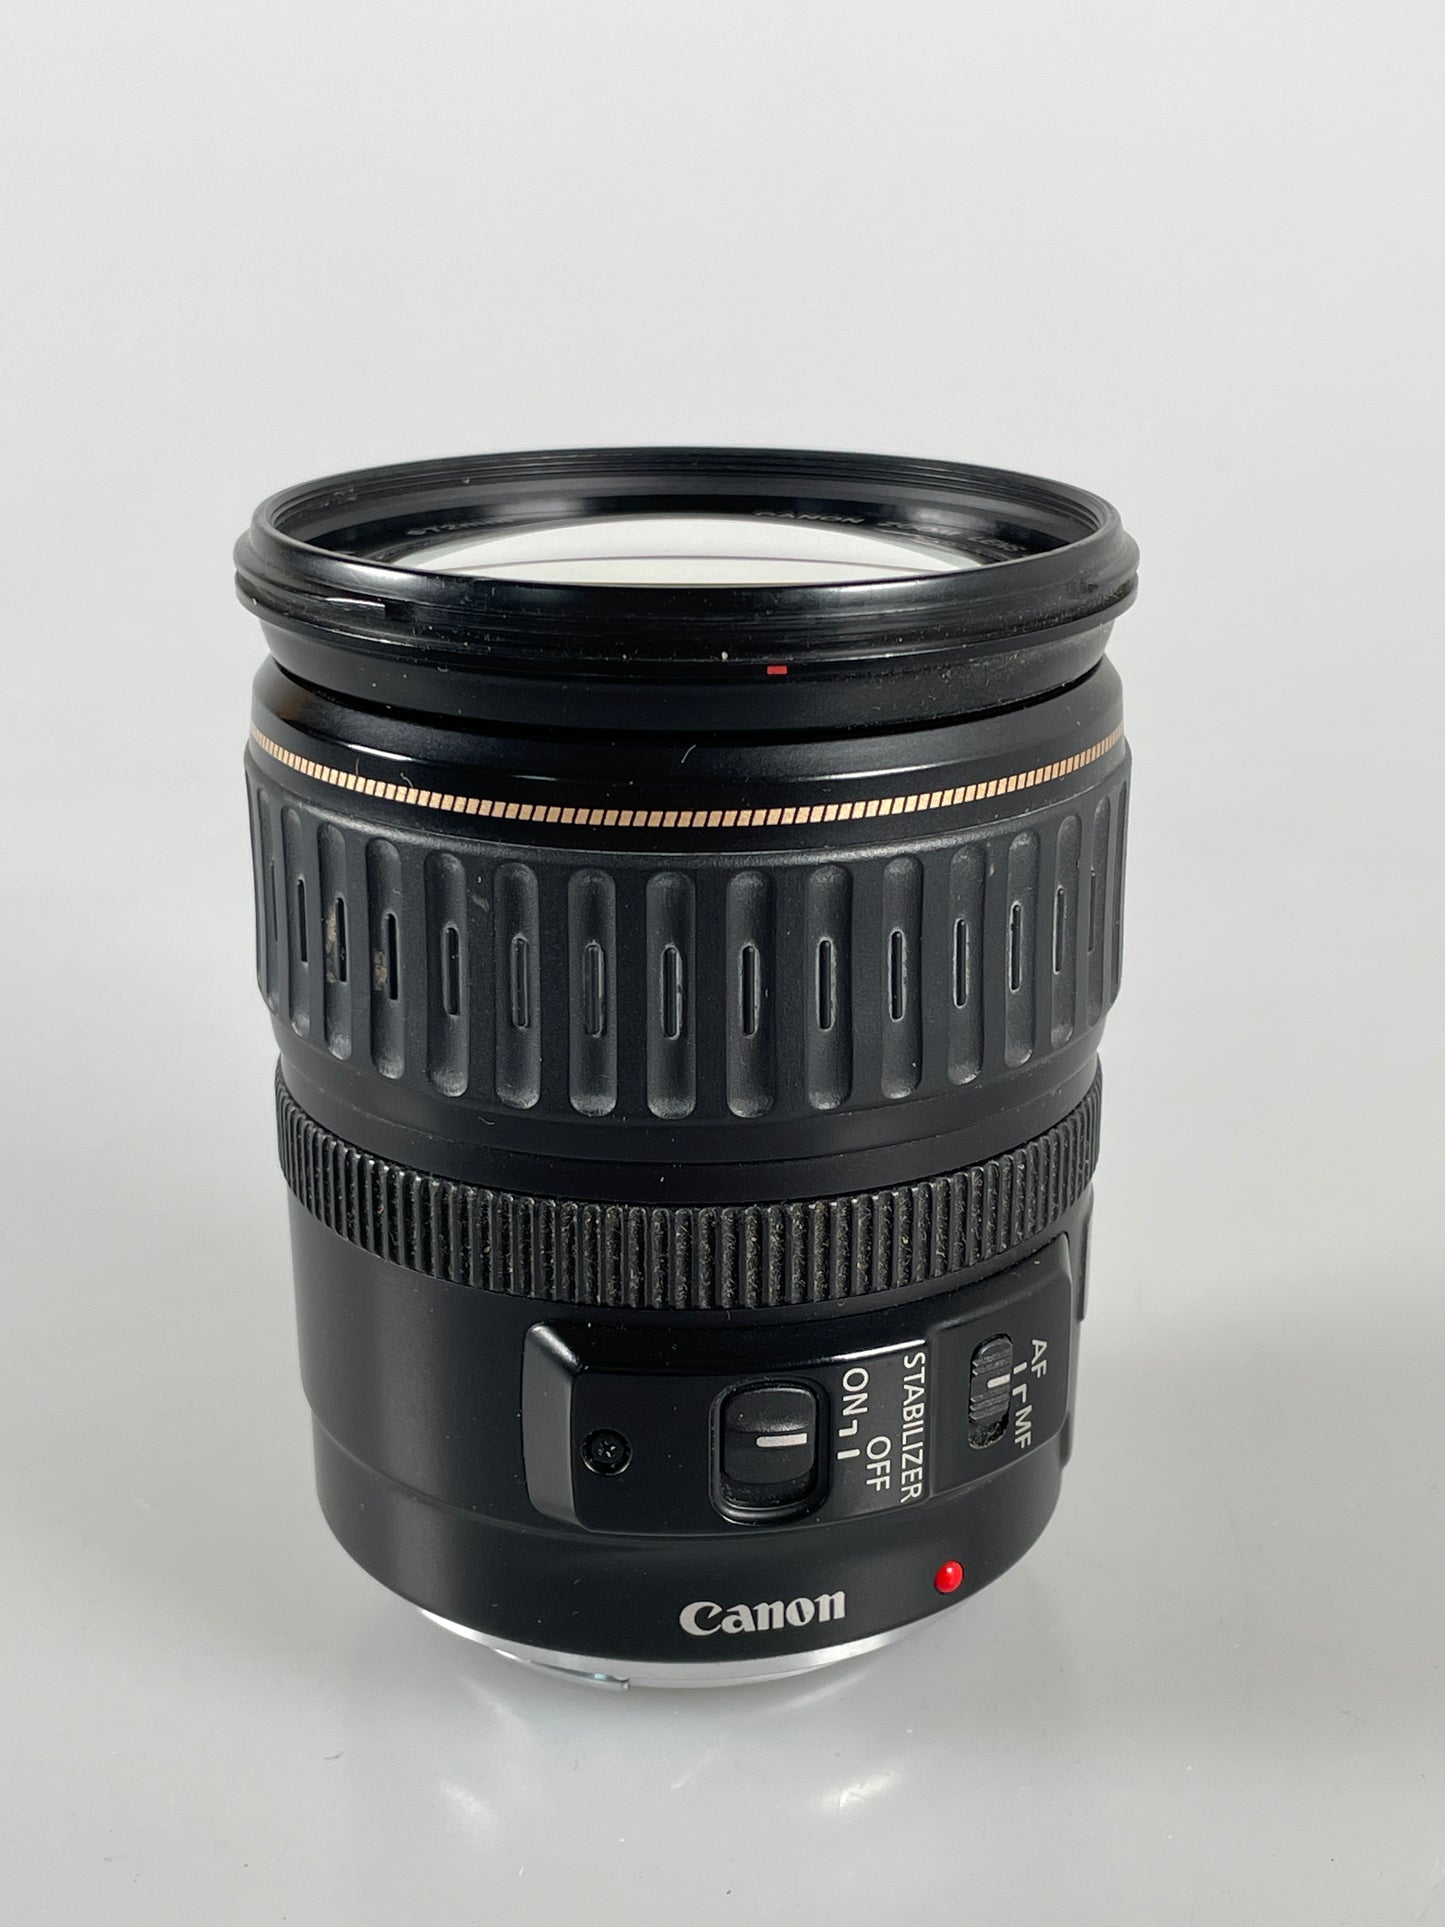 Canon EF 28-135mm f3.5-5.6 IS USM lens